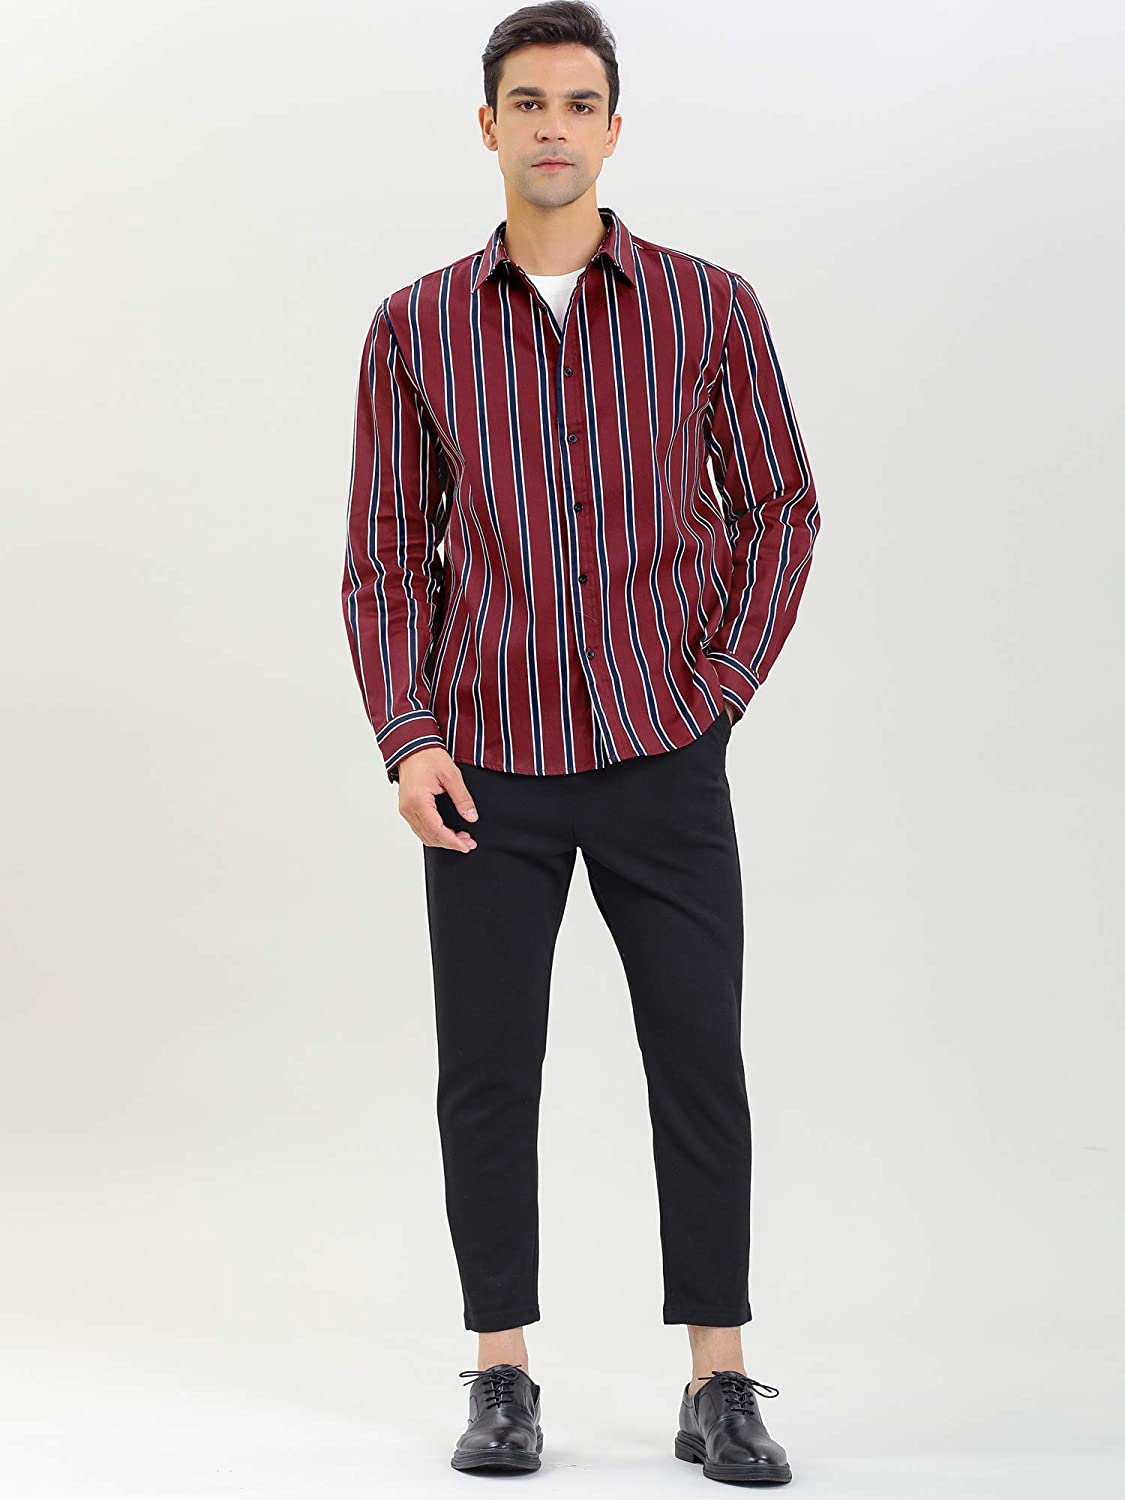 Lars Amadeus Men's Casual Business Long Sleeve Button Down Vertical Striped Dress Shirts